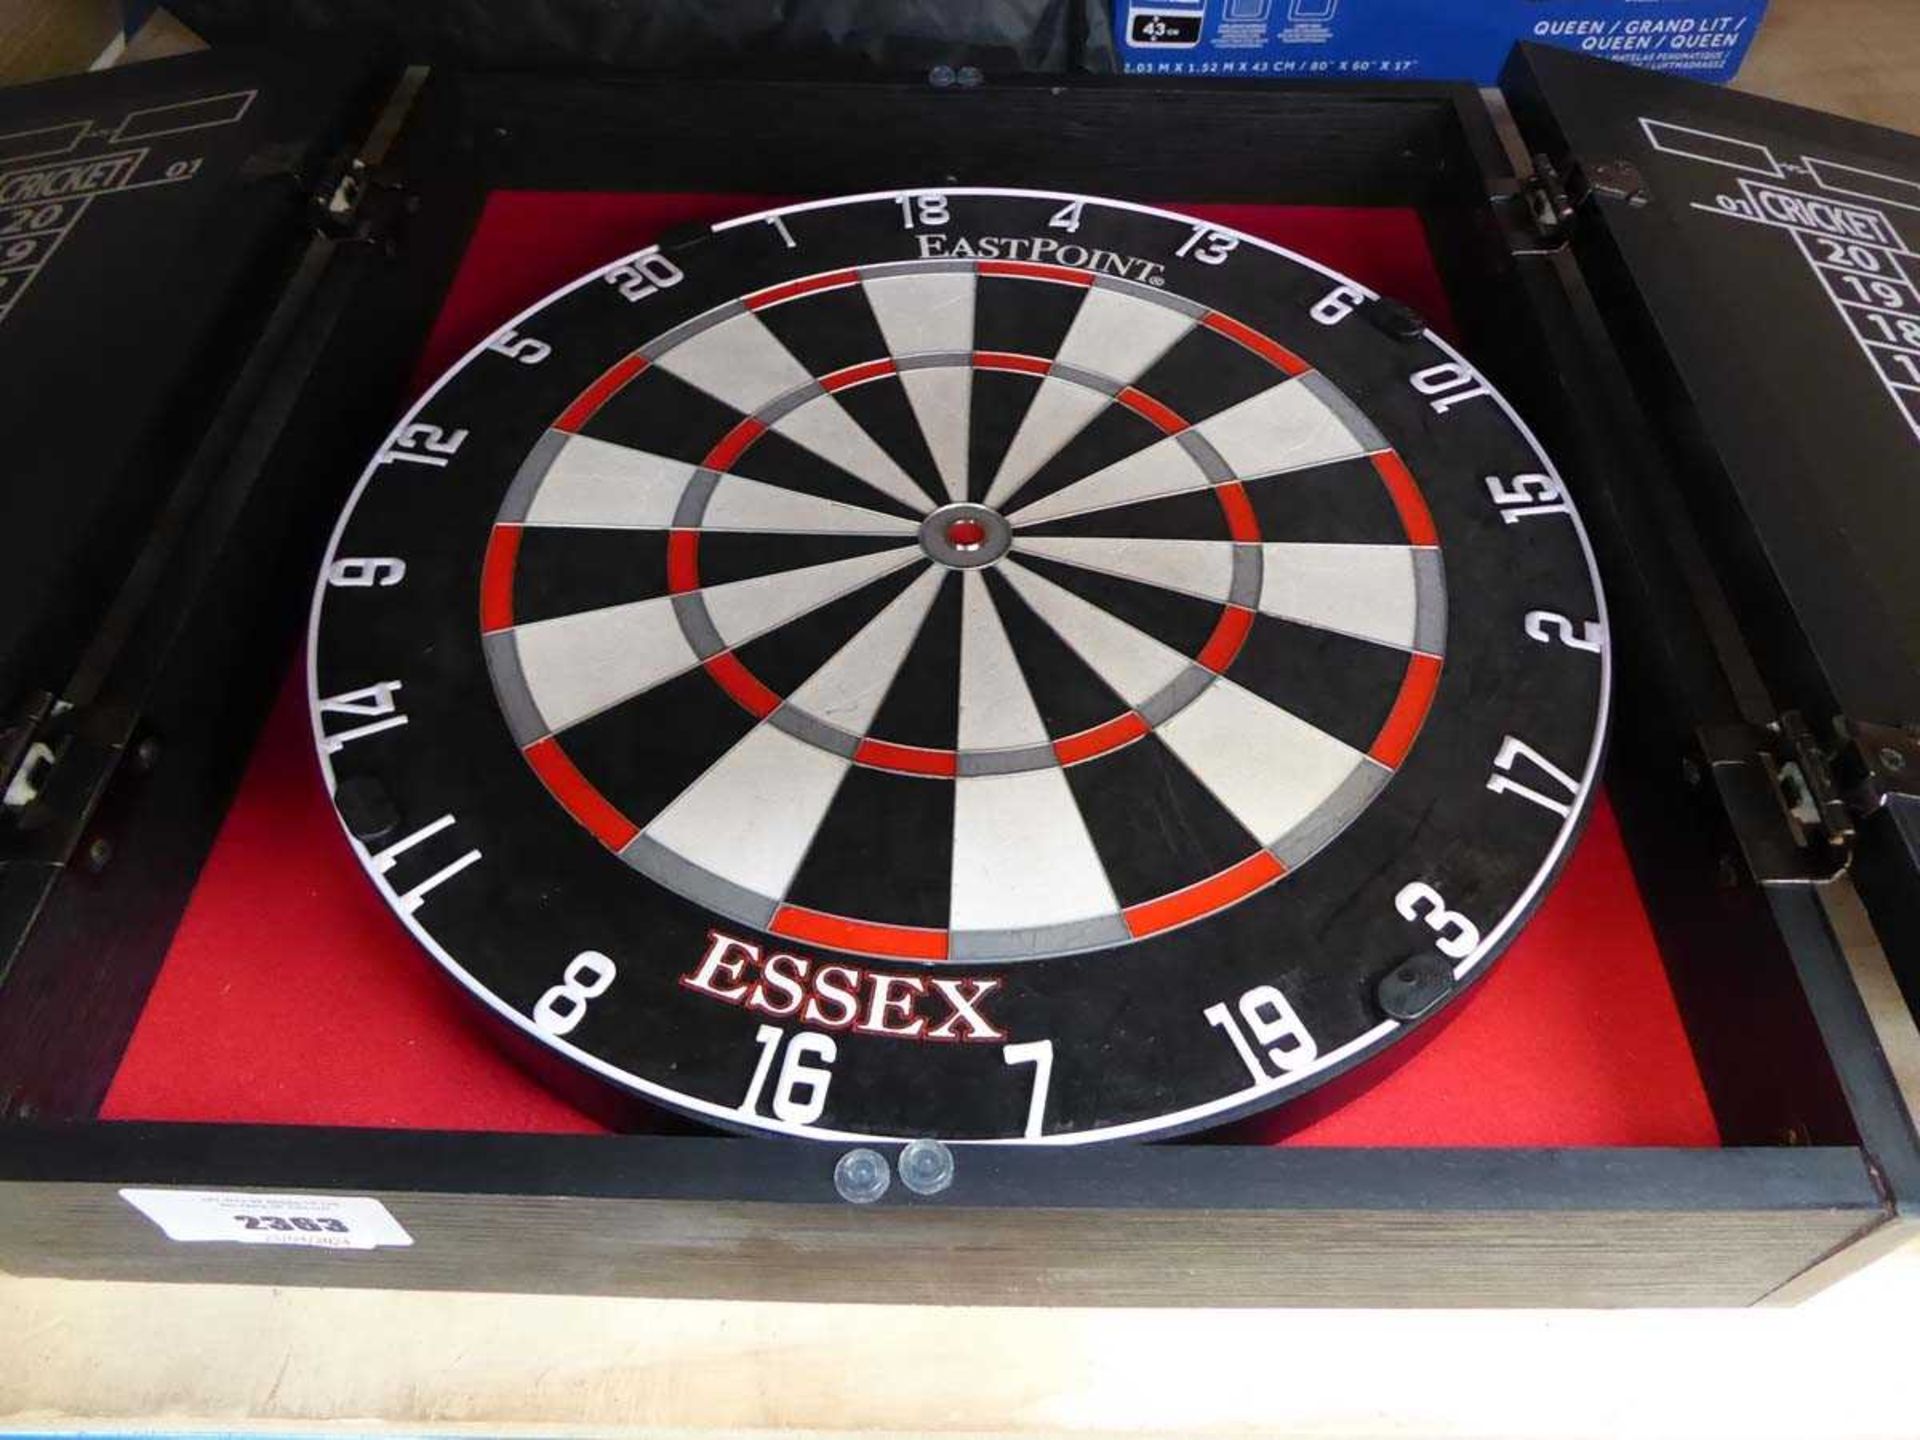 +VAT Wooden cased Eastpoint Essex dartboard - Image 2 of 2